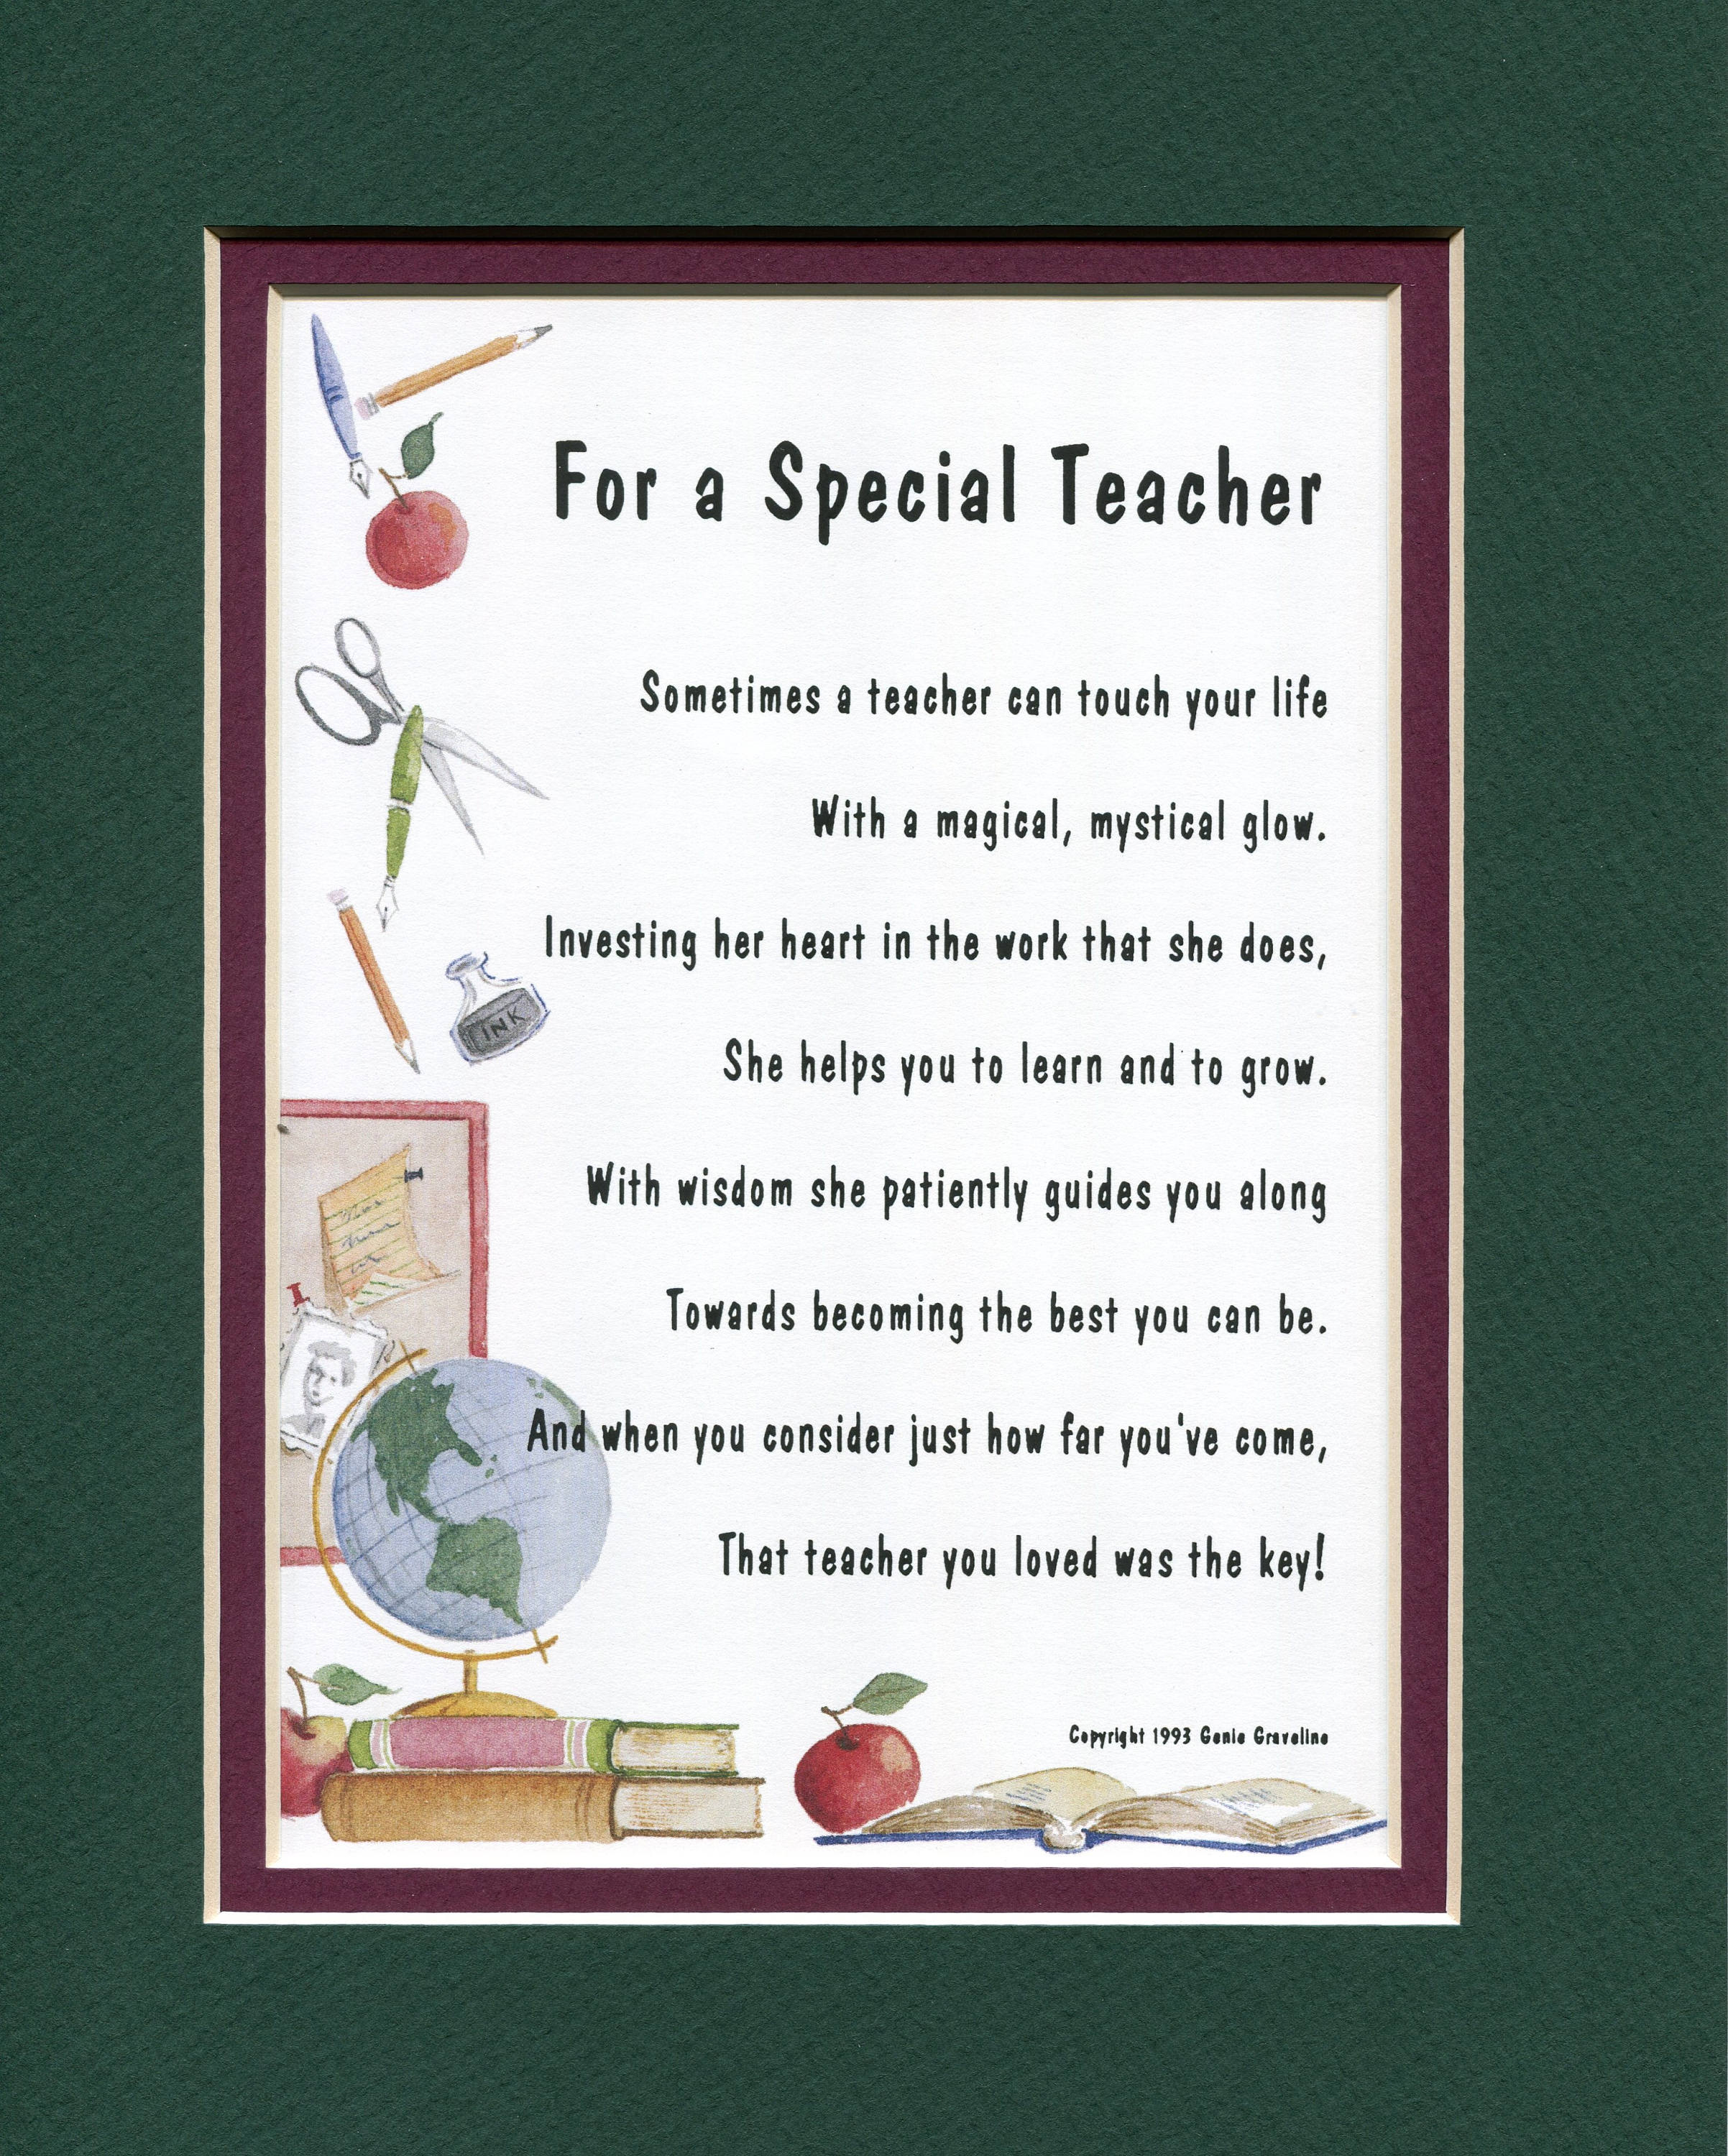 The special teacher. Poems for teachers. English poems about teachers. Poems for teachers Day. Poems about teachers for Kids.